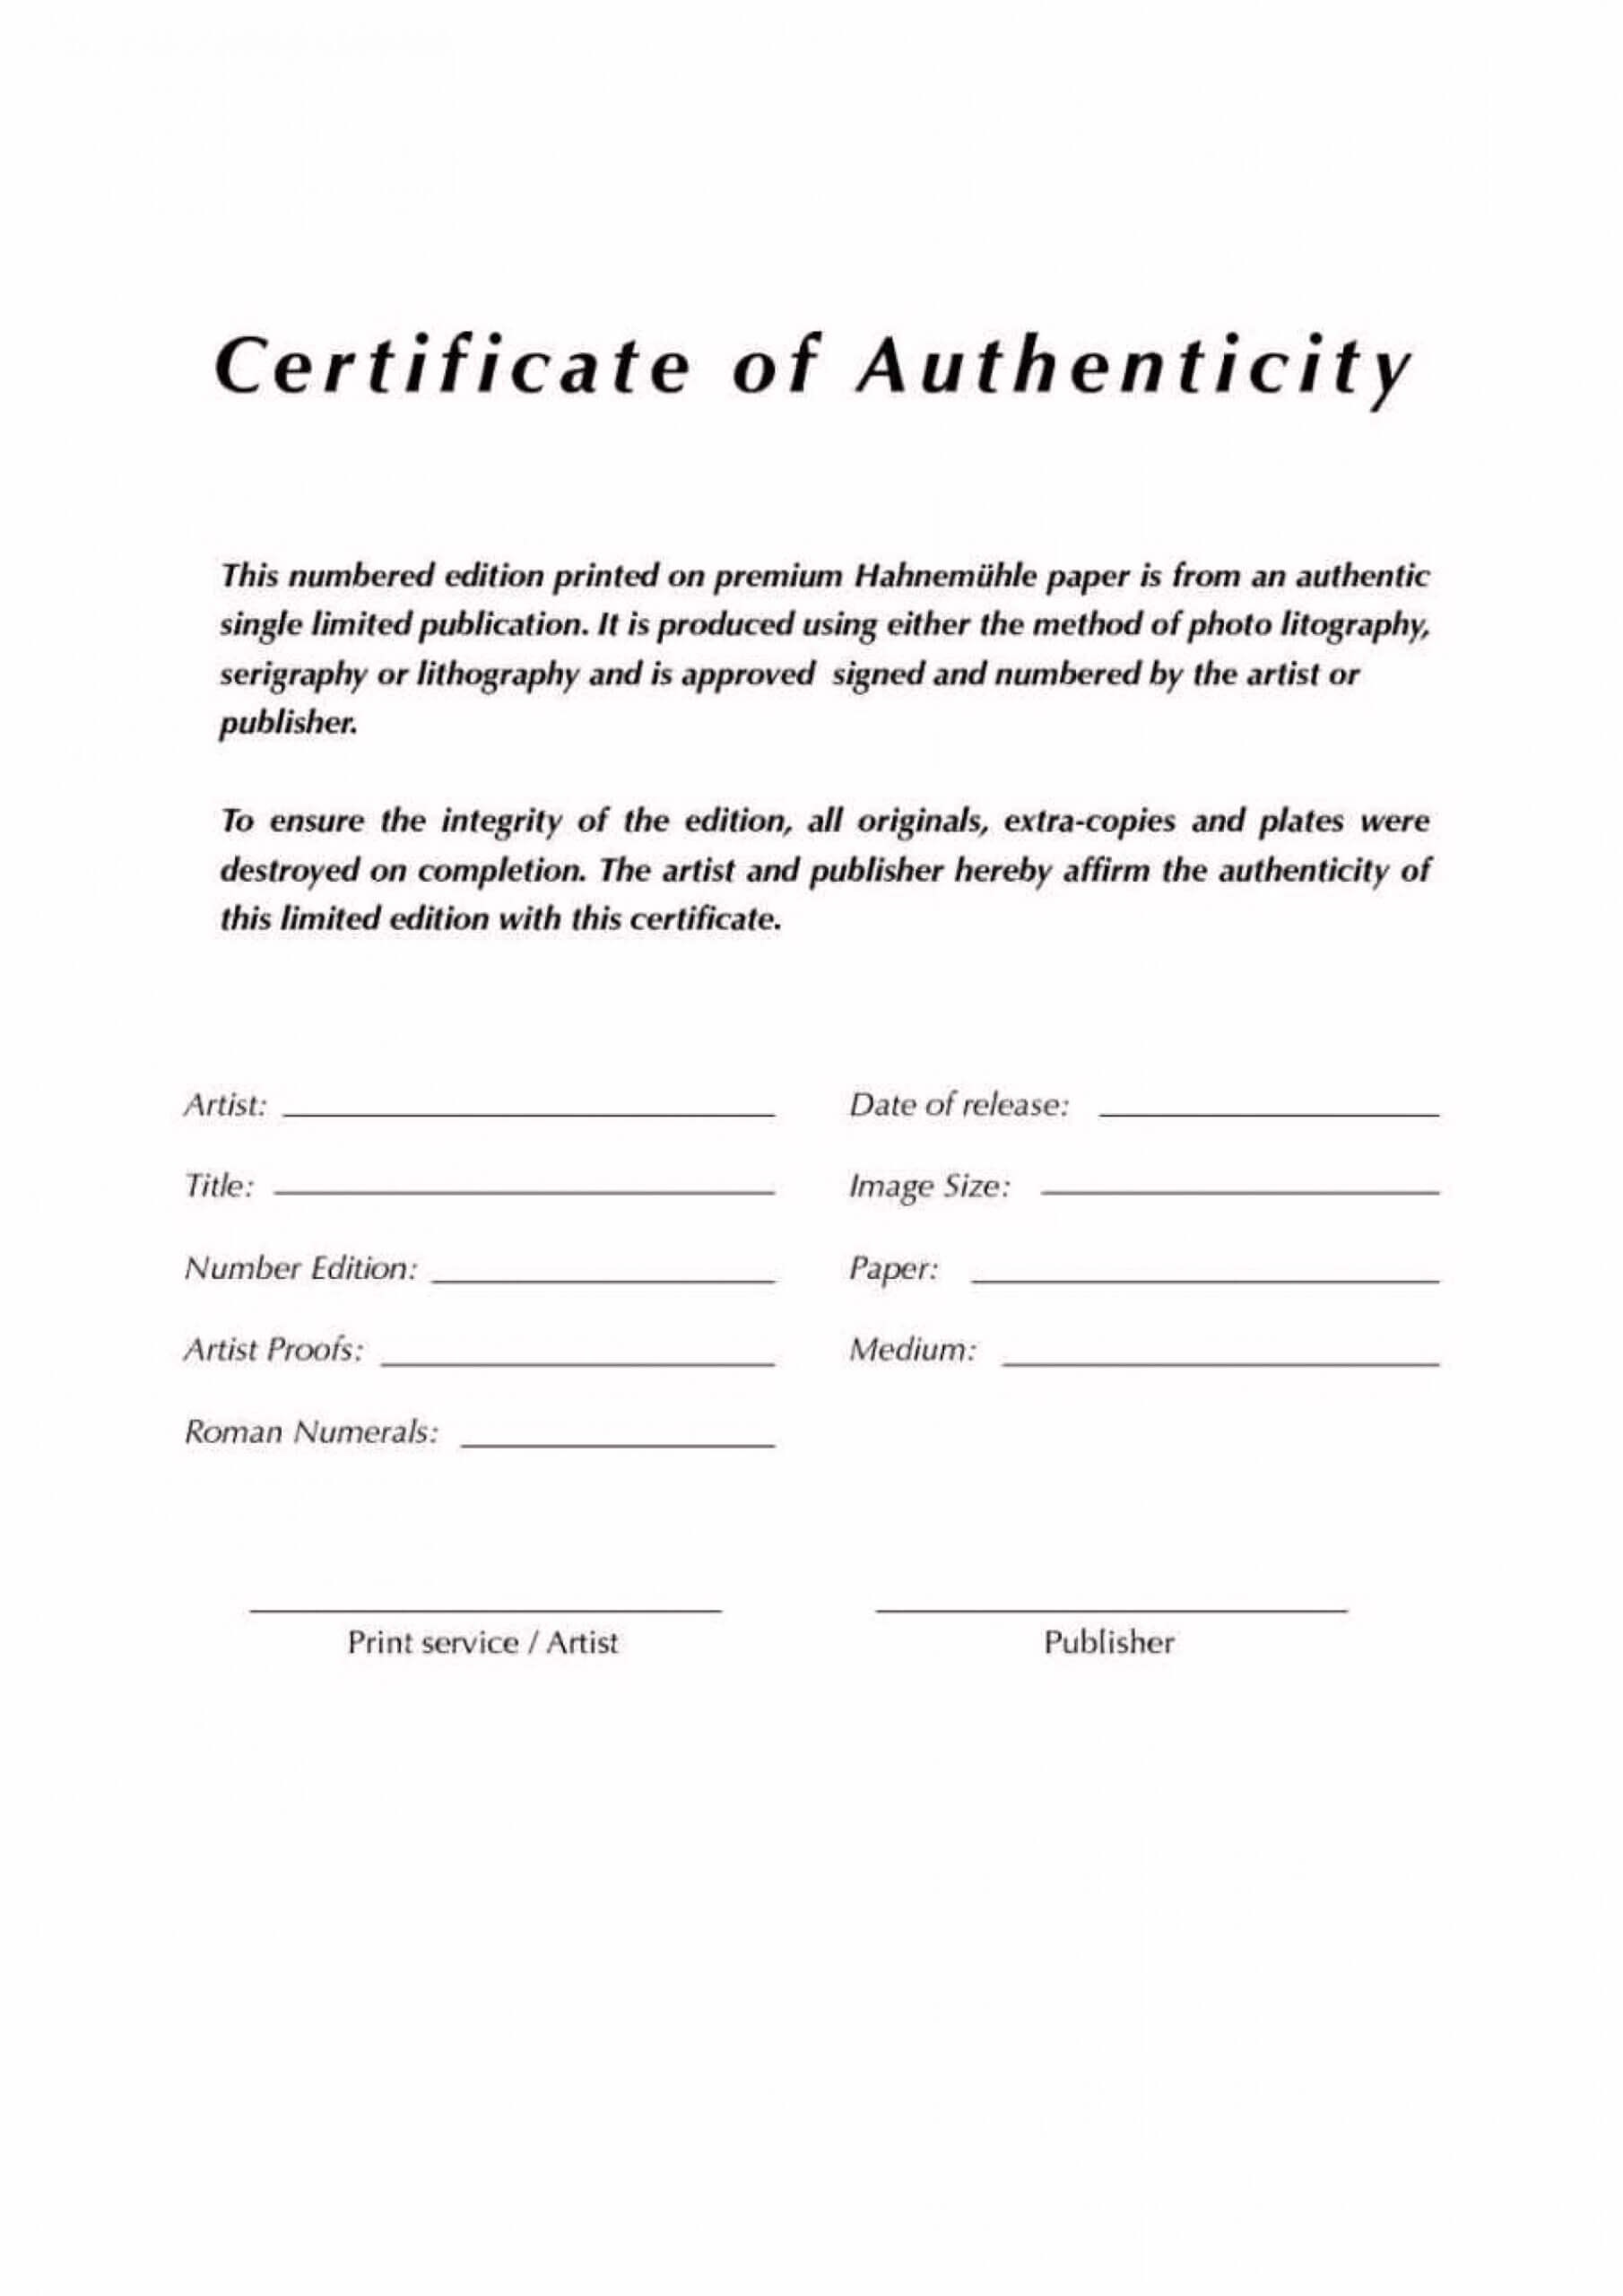 Unique Certificate Of Authenticity Template Free Ideas With Photography Certificate Of Authenticity Template